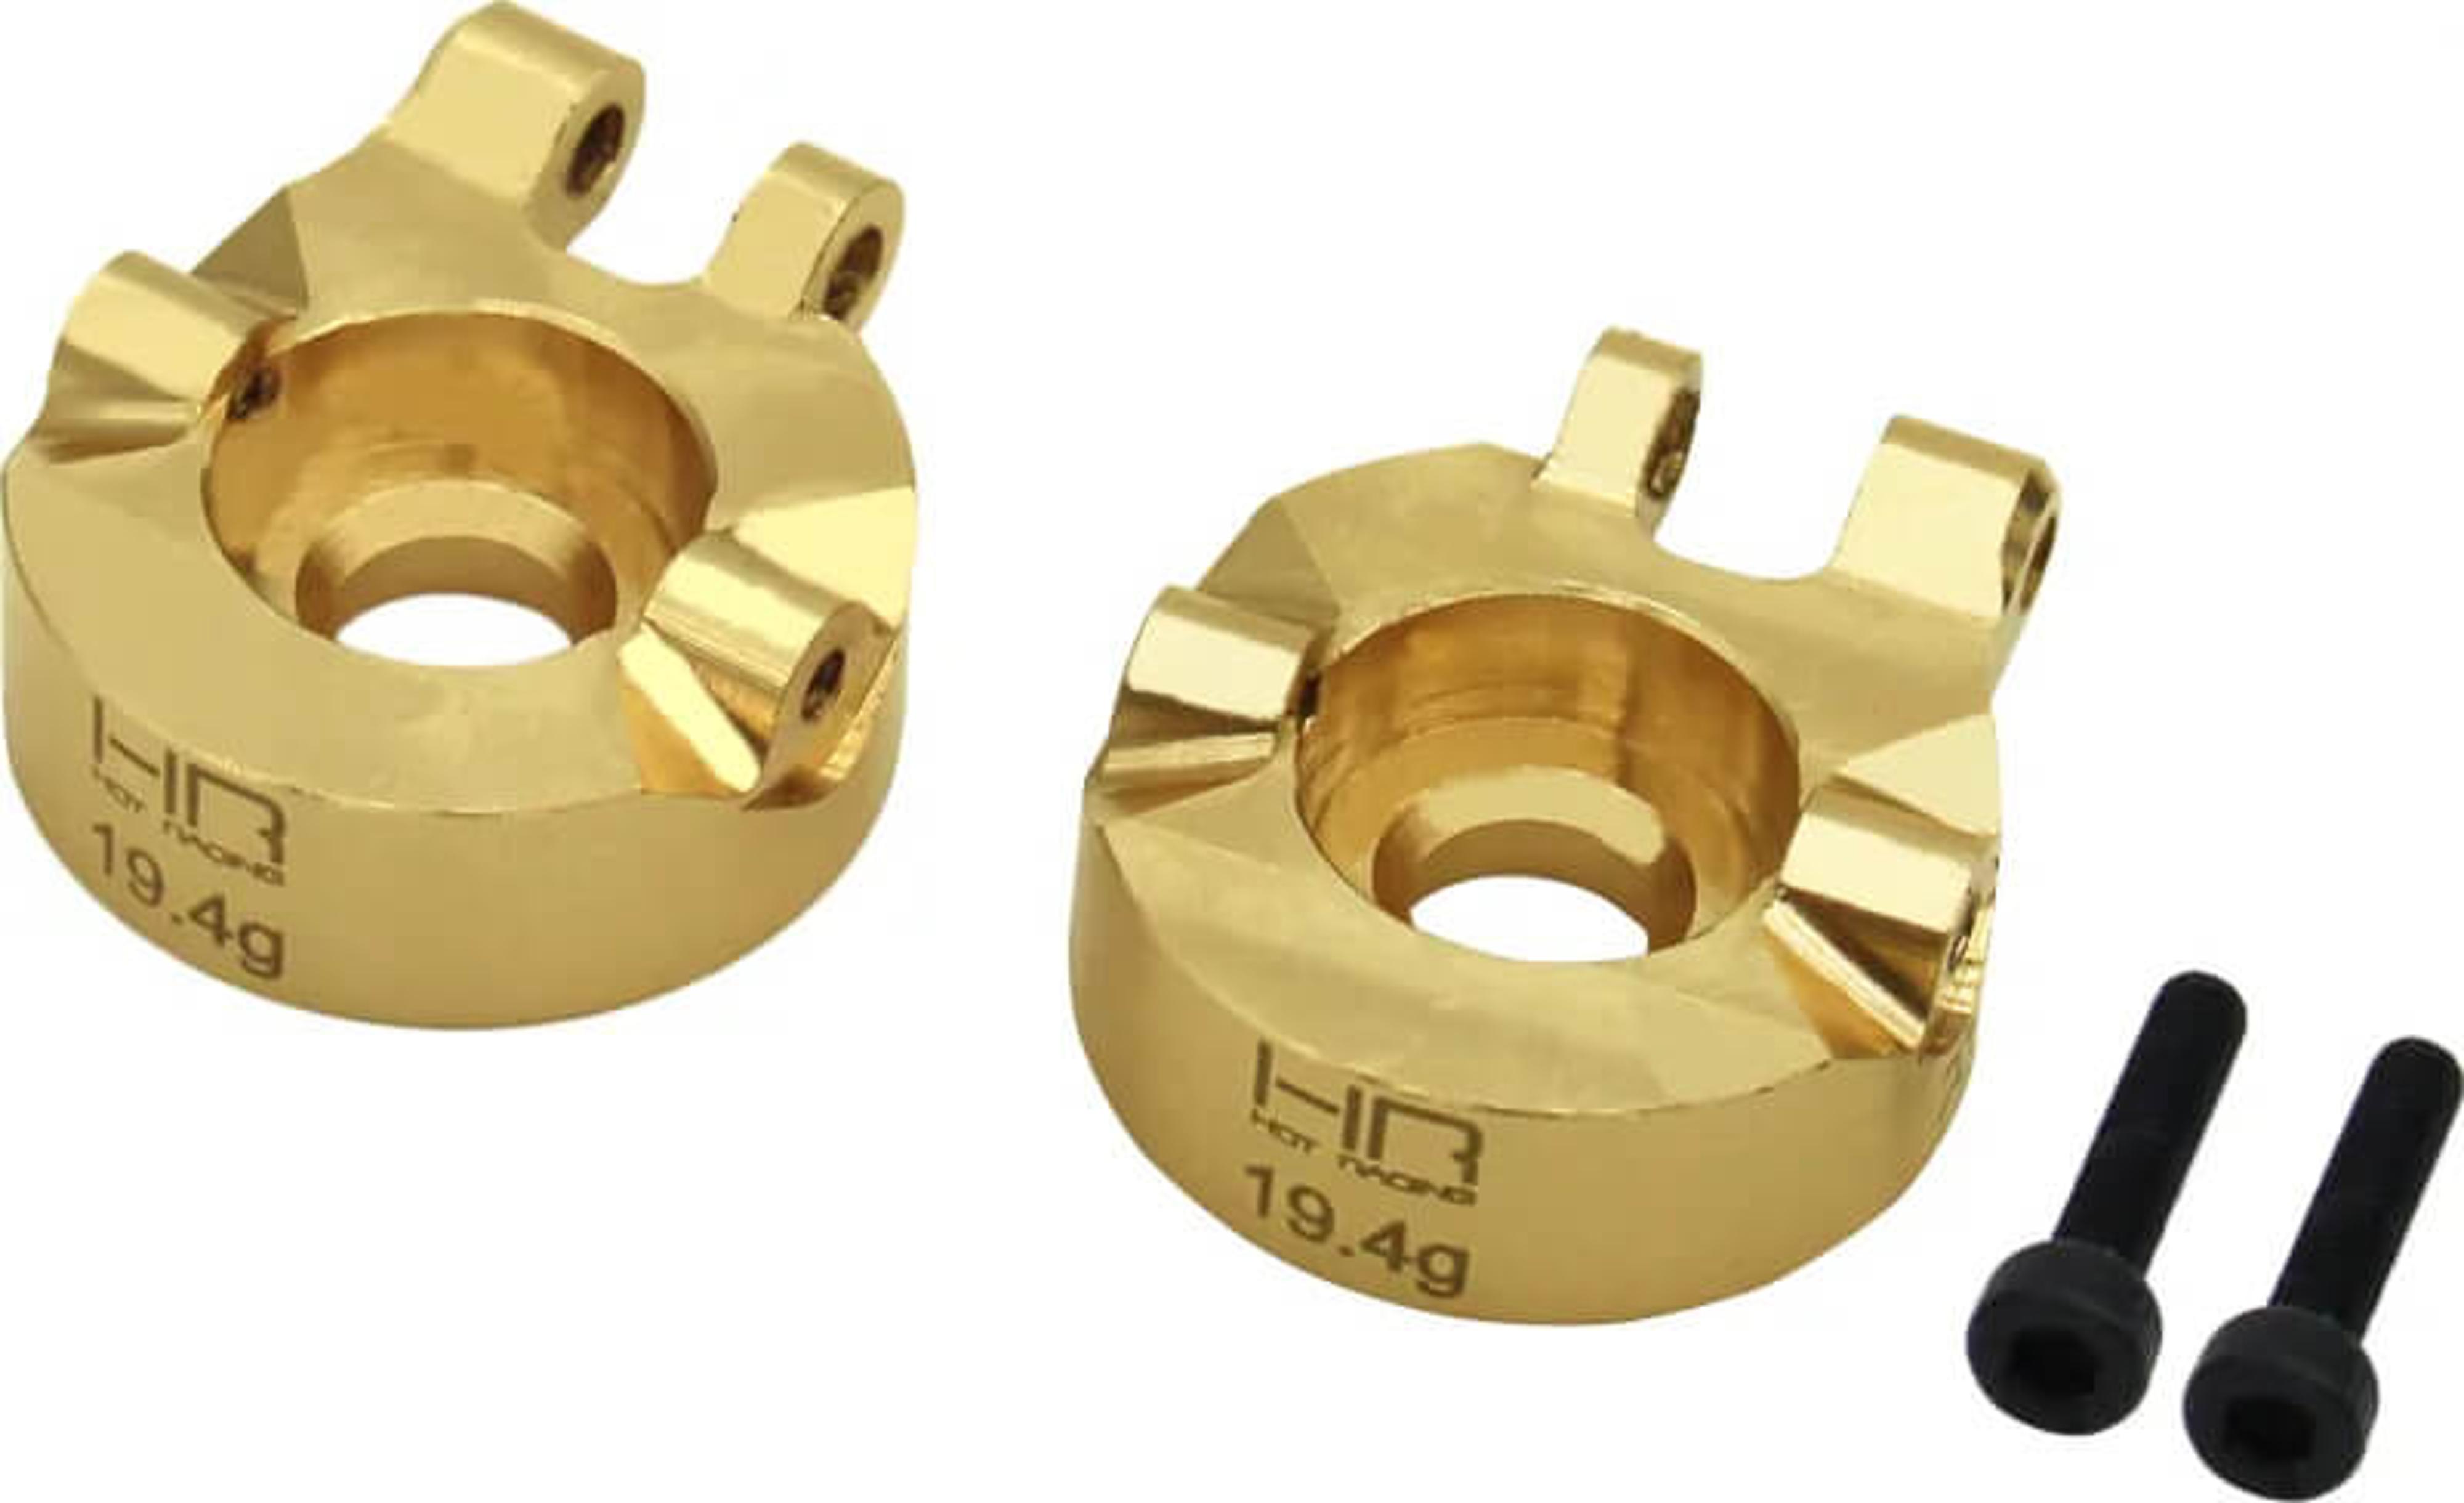 Brass Bearing Steering Knuckle 19.4g TRX4-M